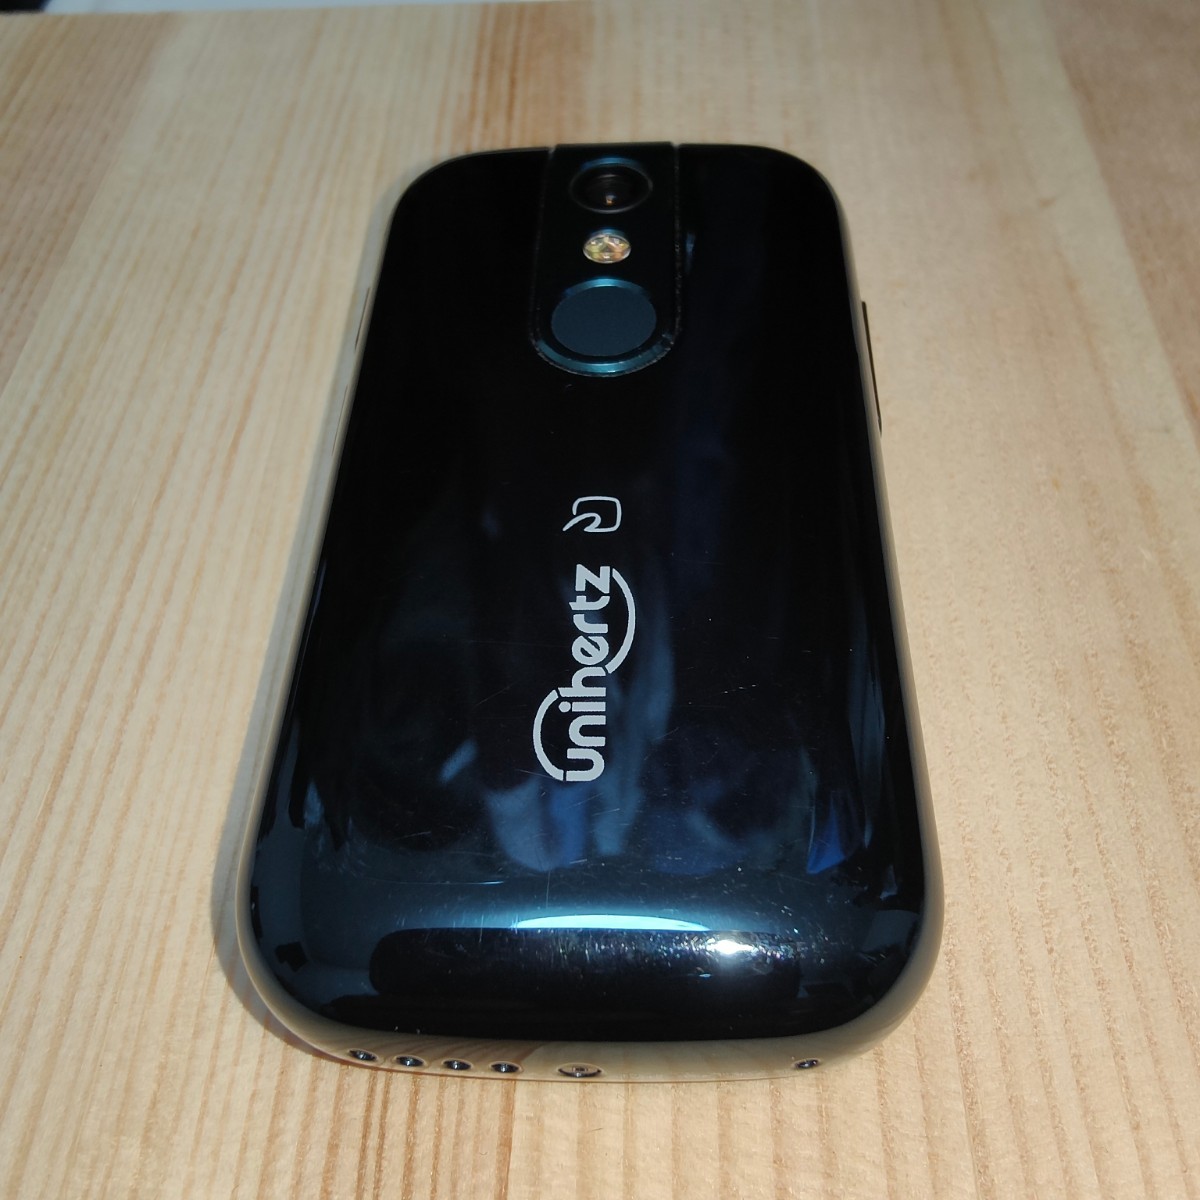 Unihertz - Jelly 2 世界最小Felica機能搭載スマートフォン Android 11搭載 おサイフケータイ中古_画像5